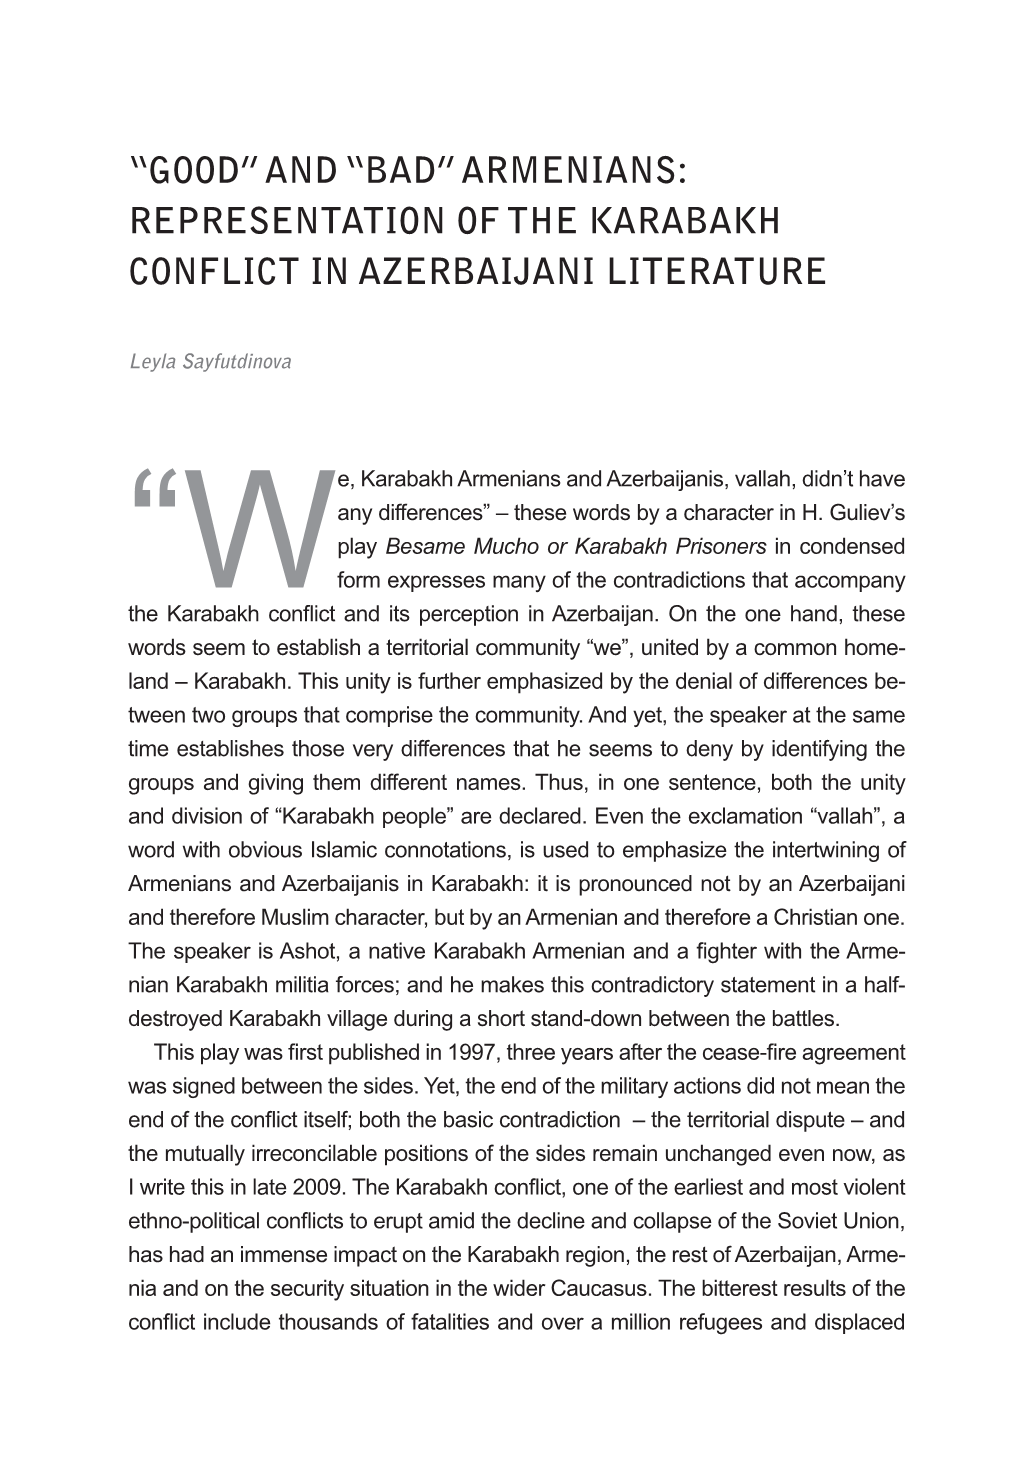 “Good” and “Bad” Armenians: Representation of the Karabakh Conflict in Azerbaijani Literature